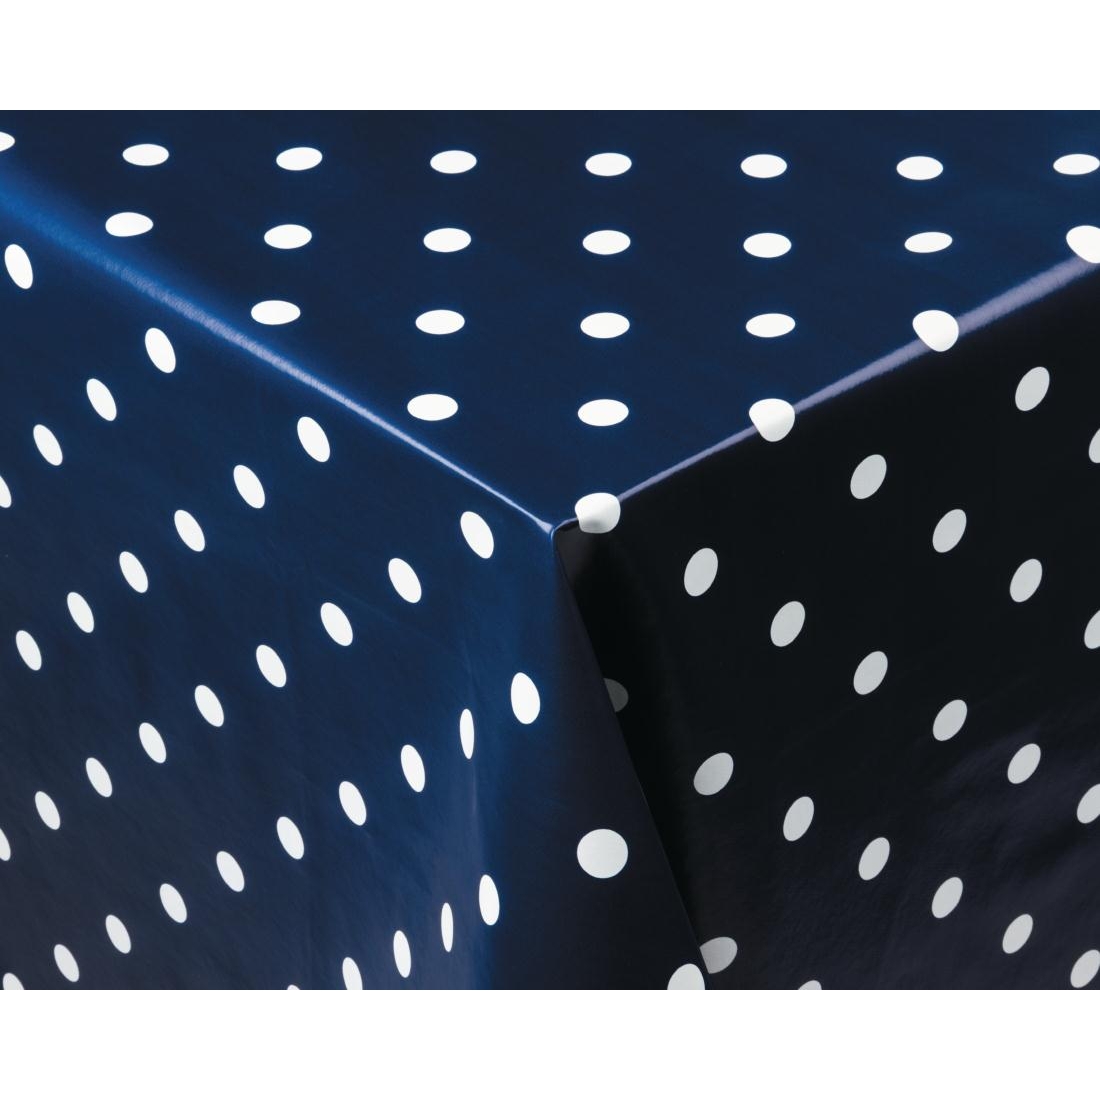 PVC Polka Dot Tablecloth Blue 54 x 90in